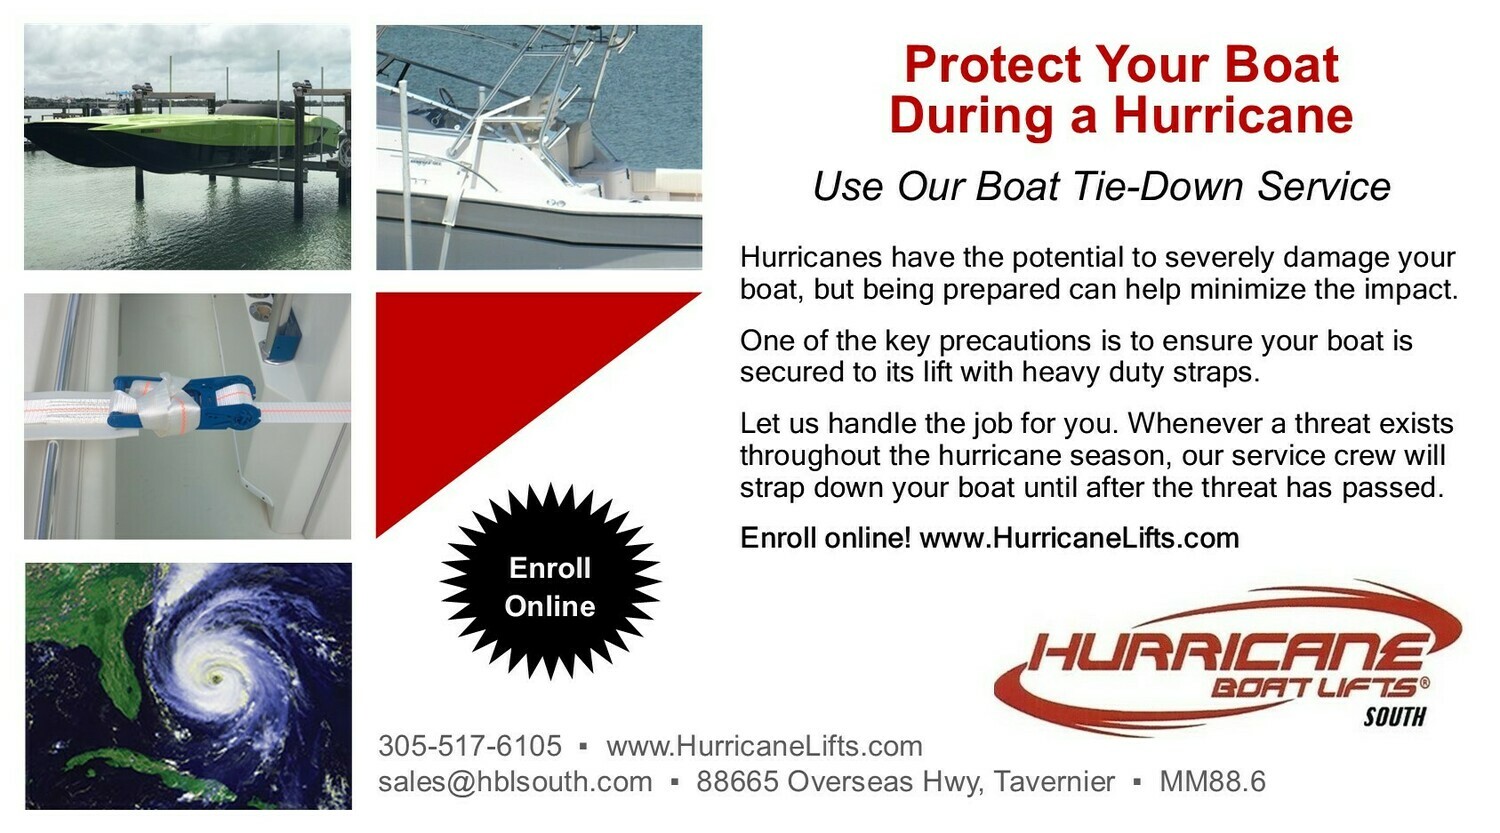 Hurricane Boat Lift Tie-Down Service - $349.00